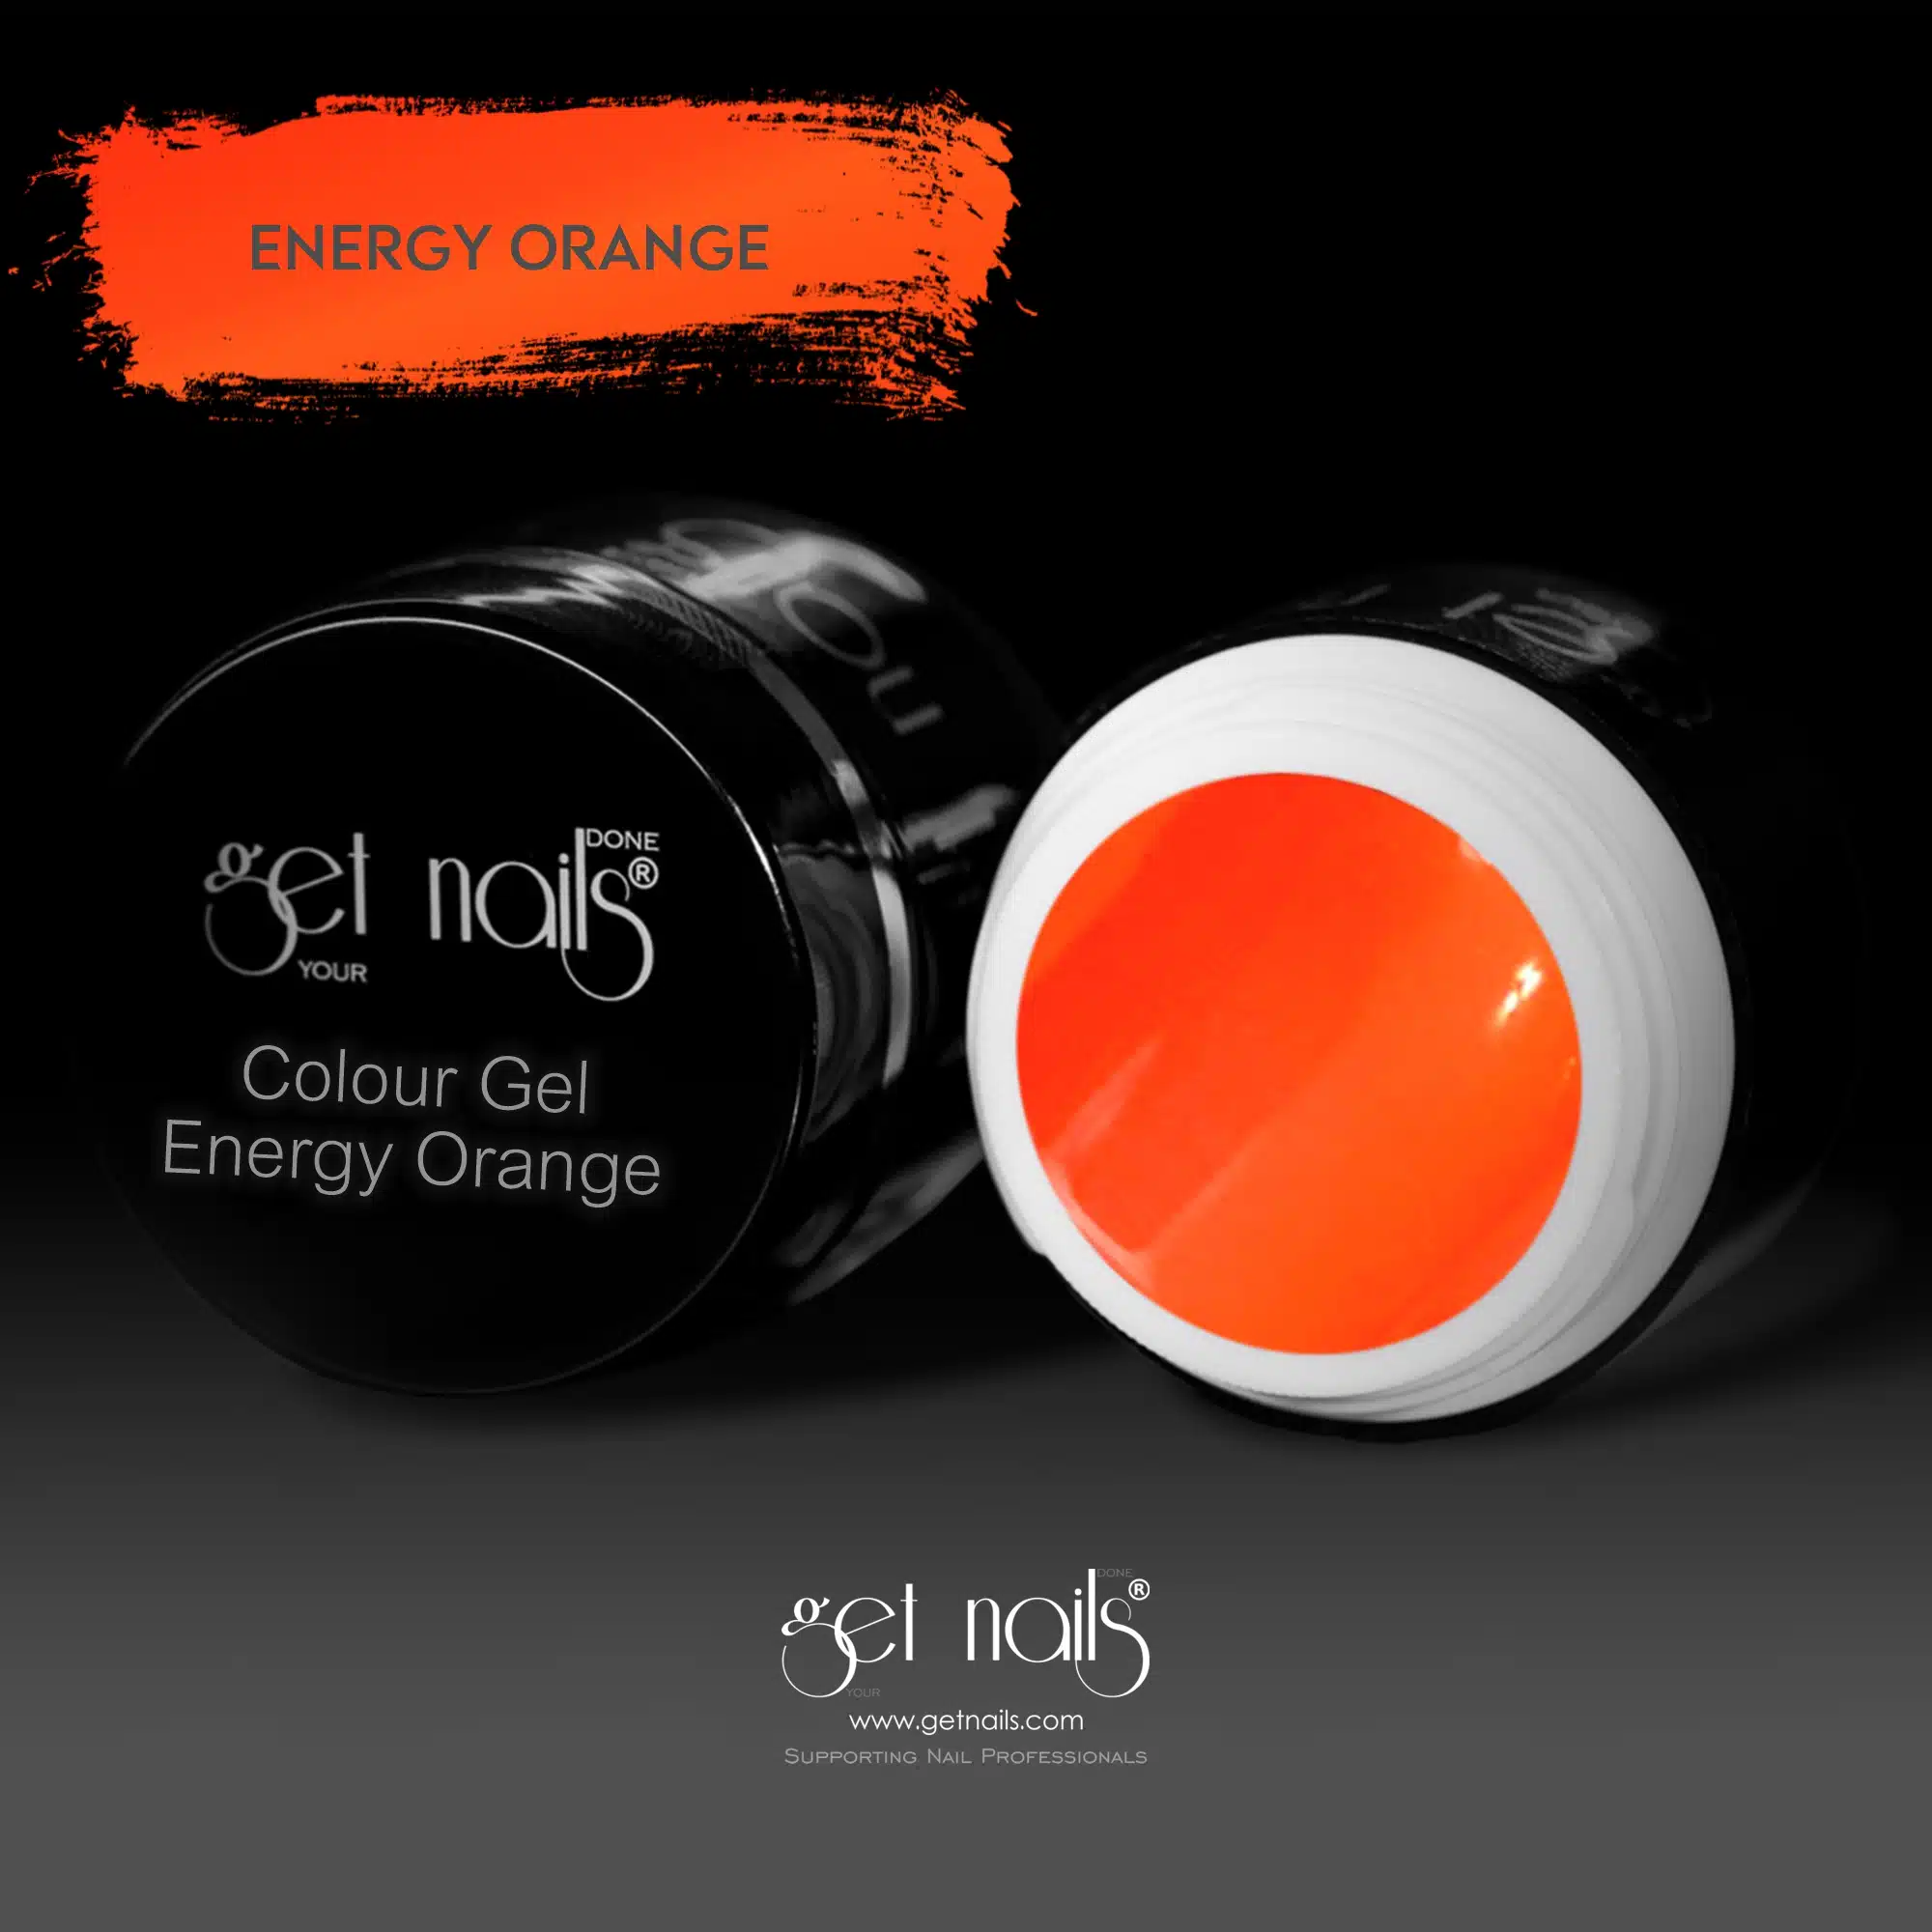 Get Nails Austria - Gel colorato Energy Orange 5g